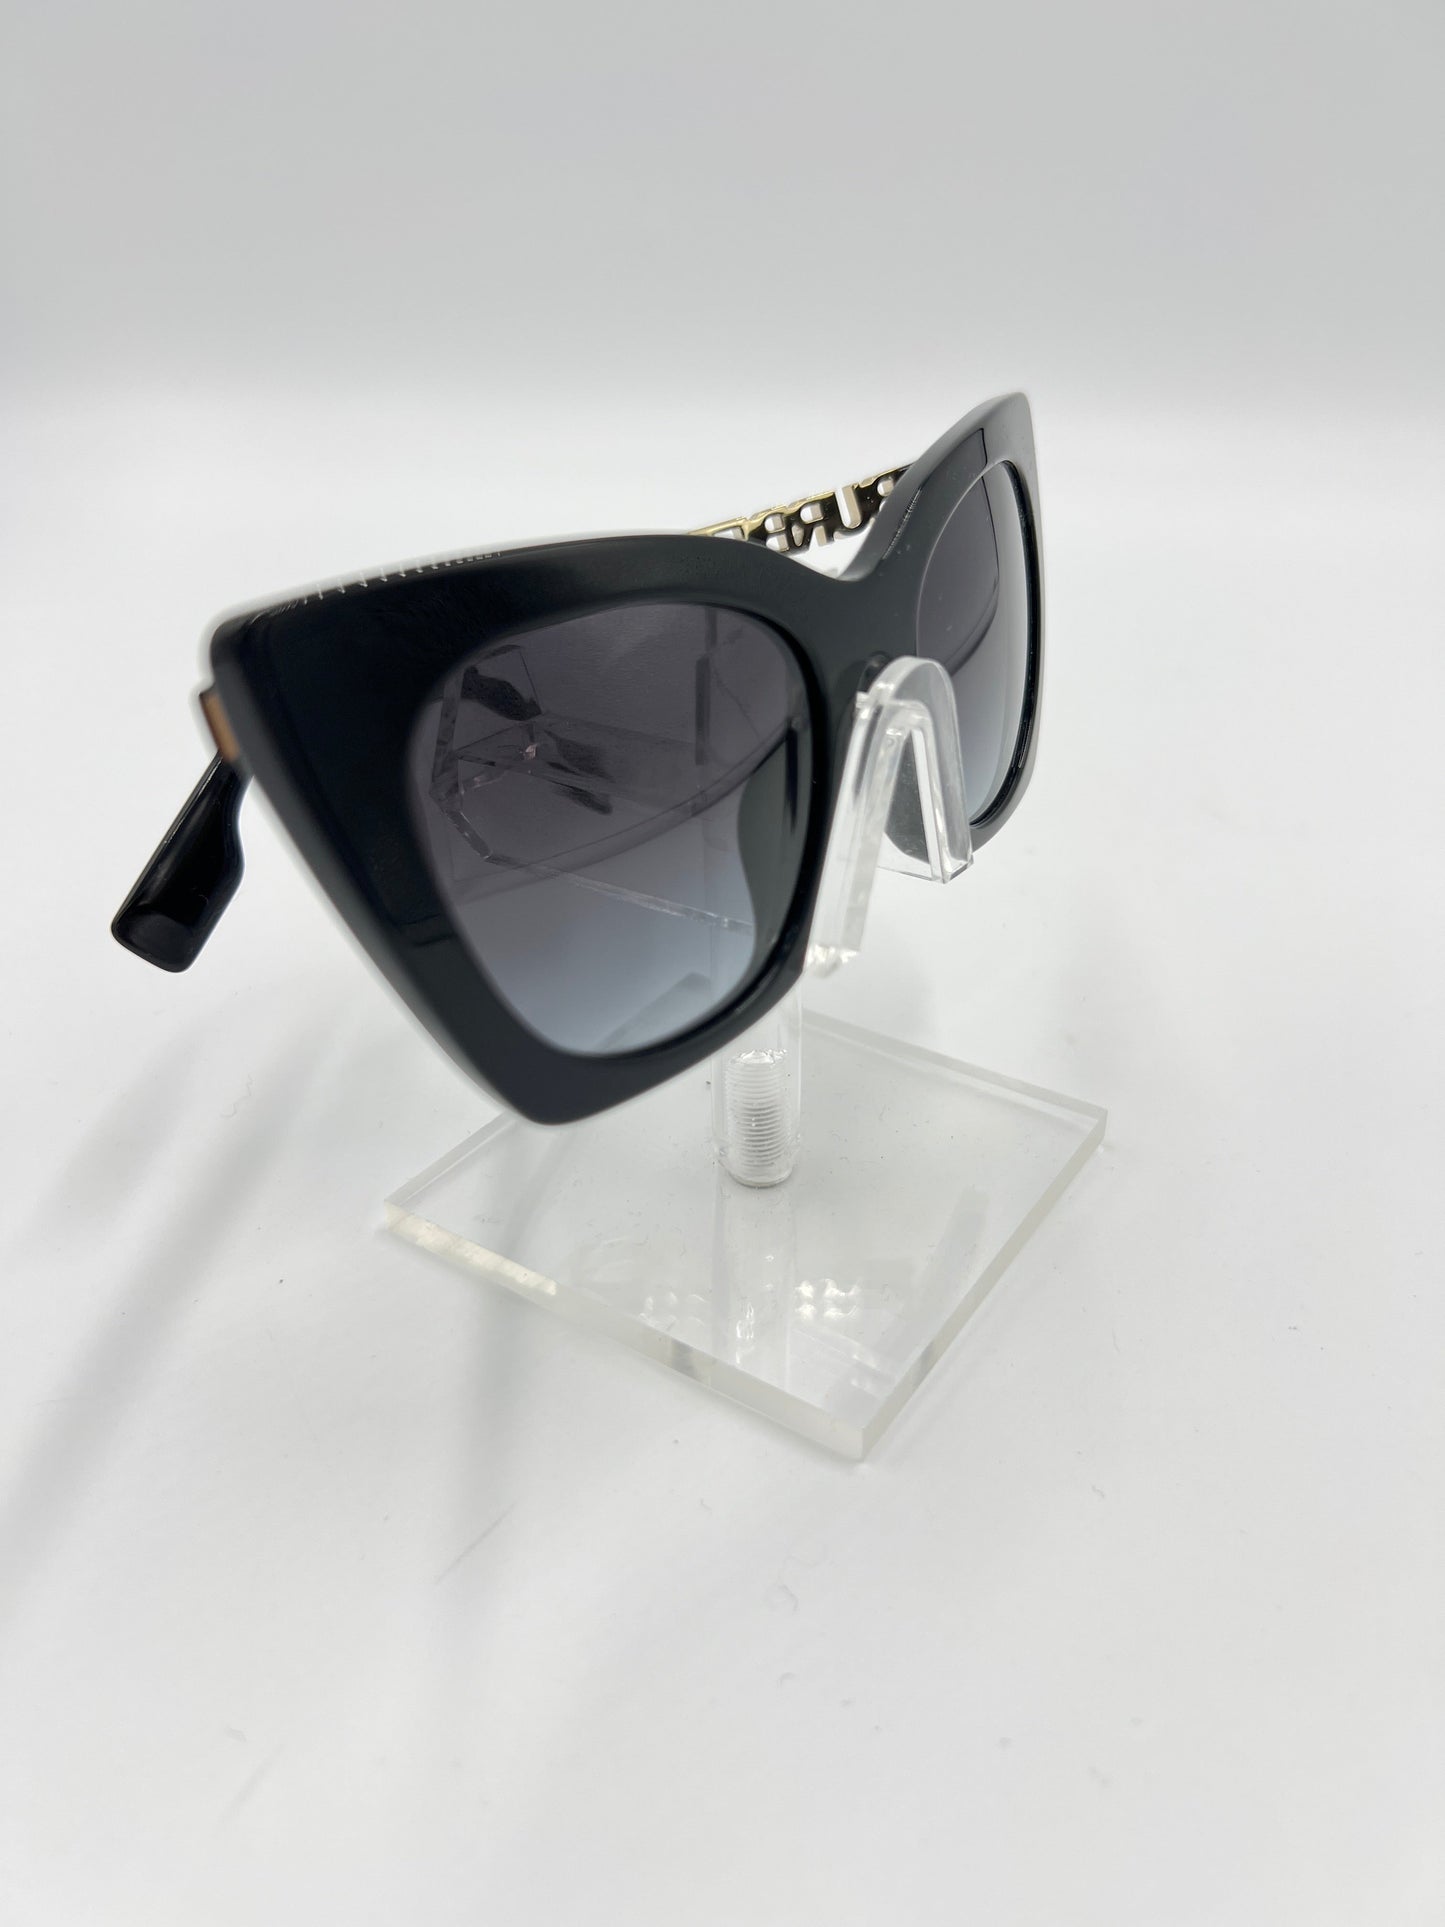 Sunglasses Designer Burberry